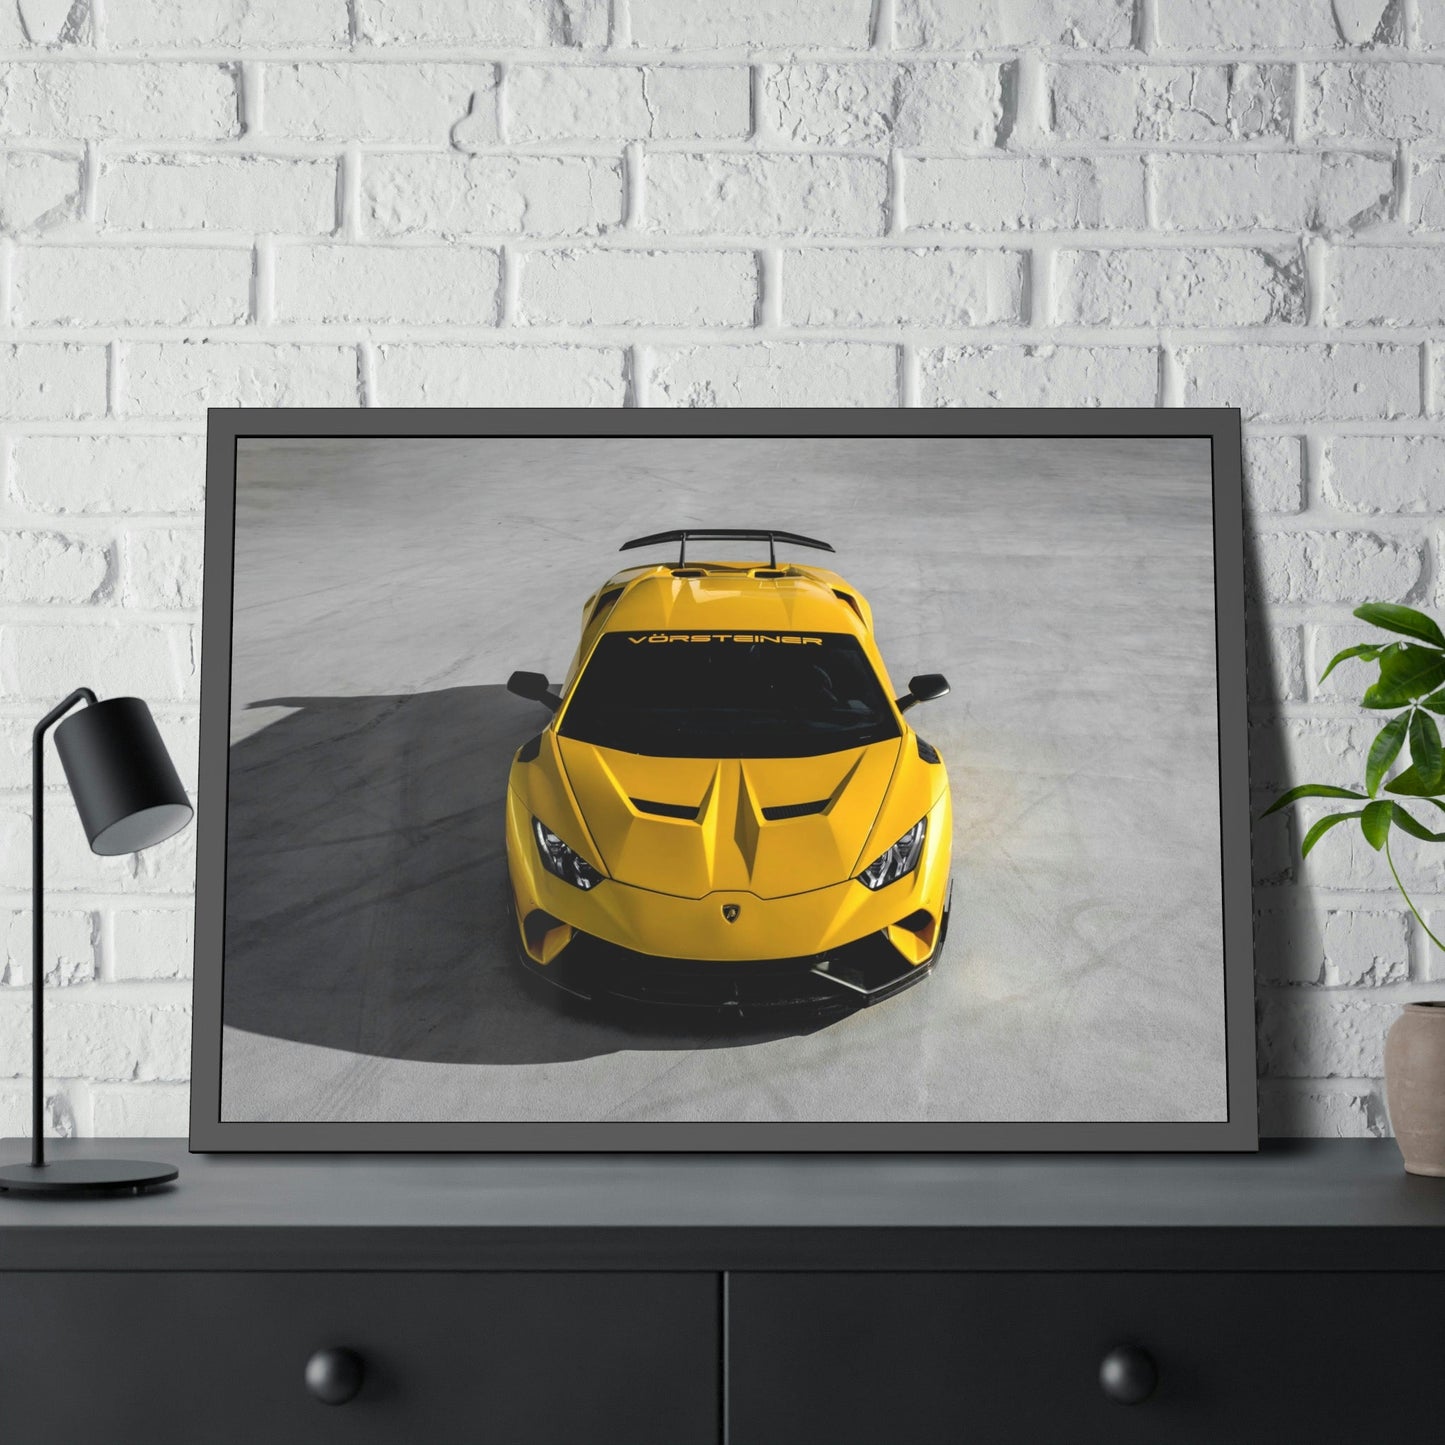 Italian Masterpiece on Canvas & Poster: Striking Print of Lamborghini